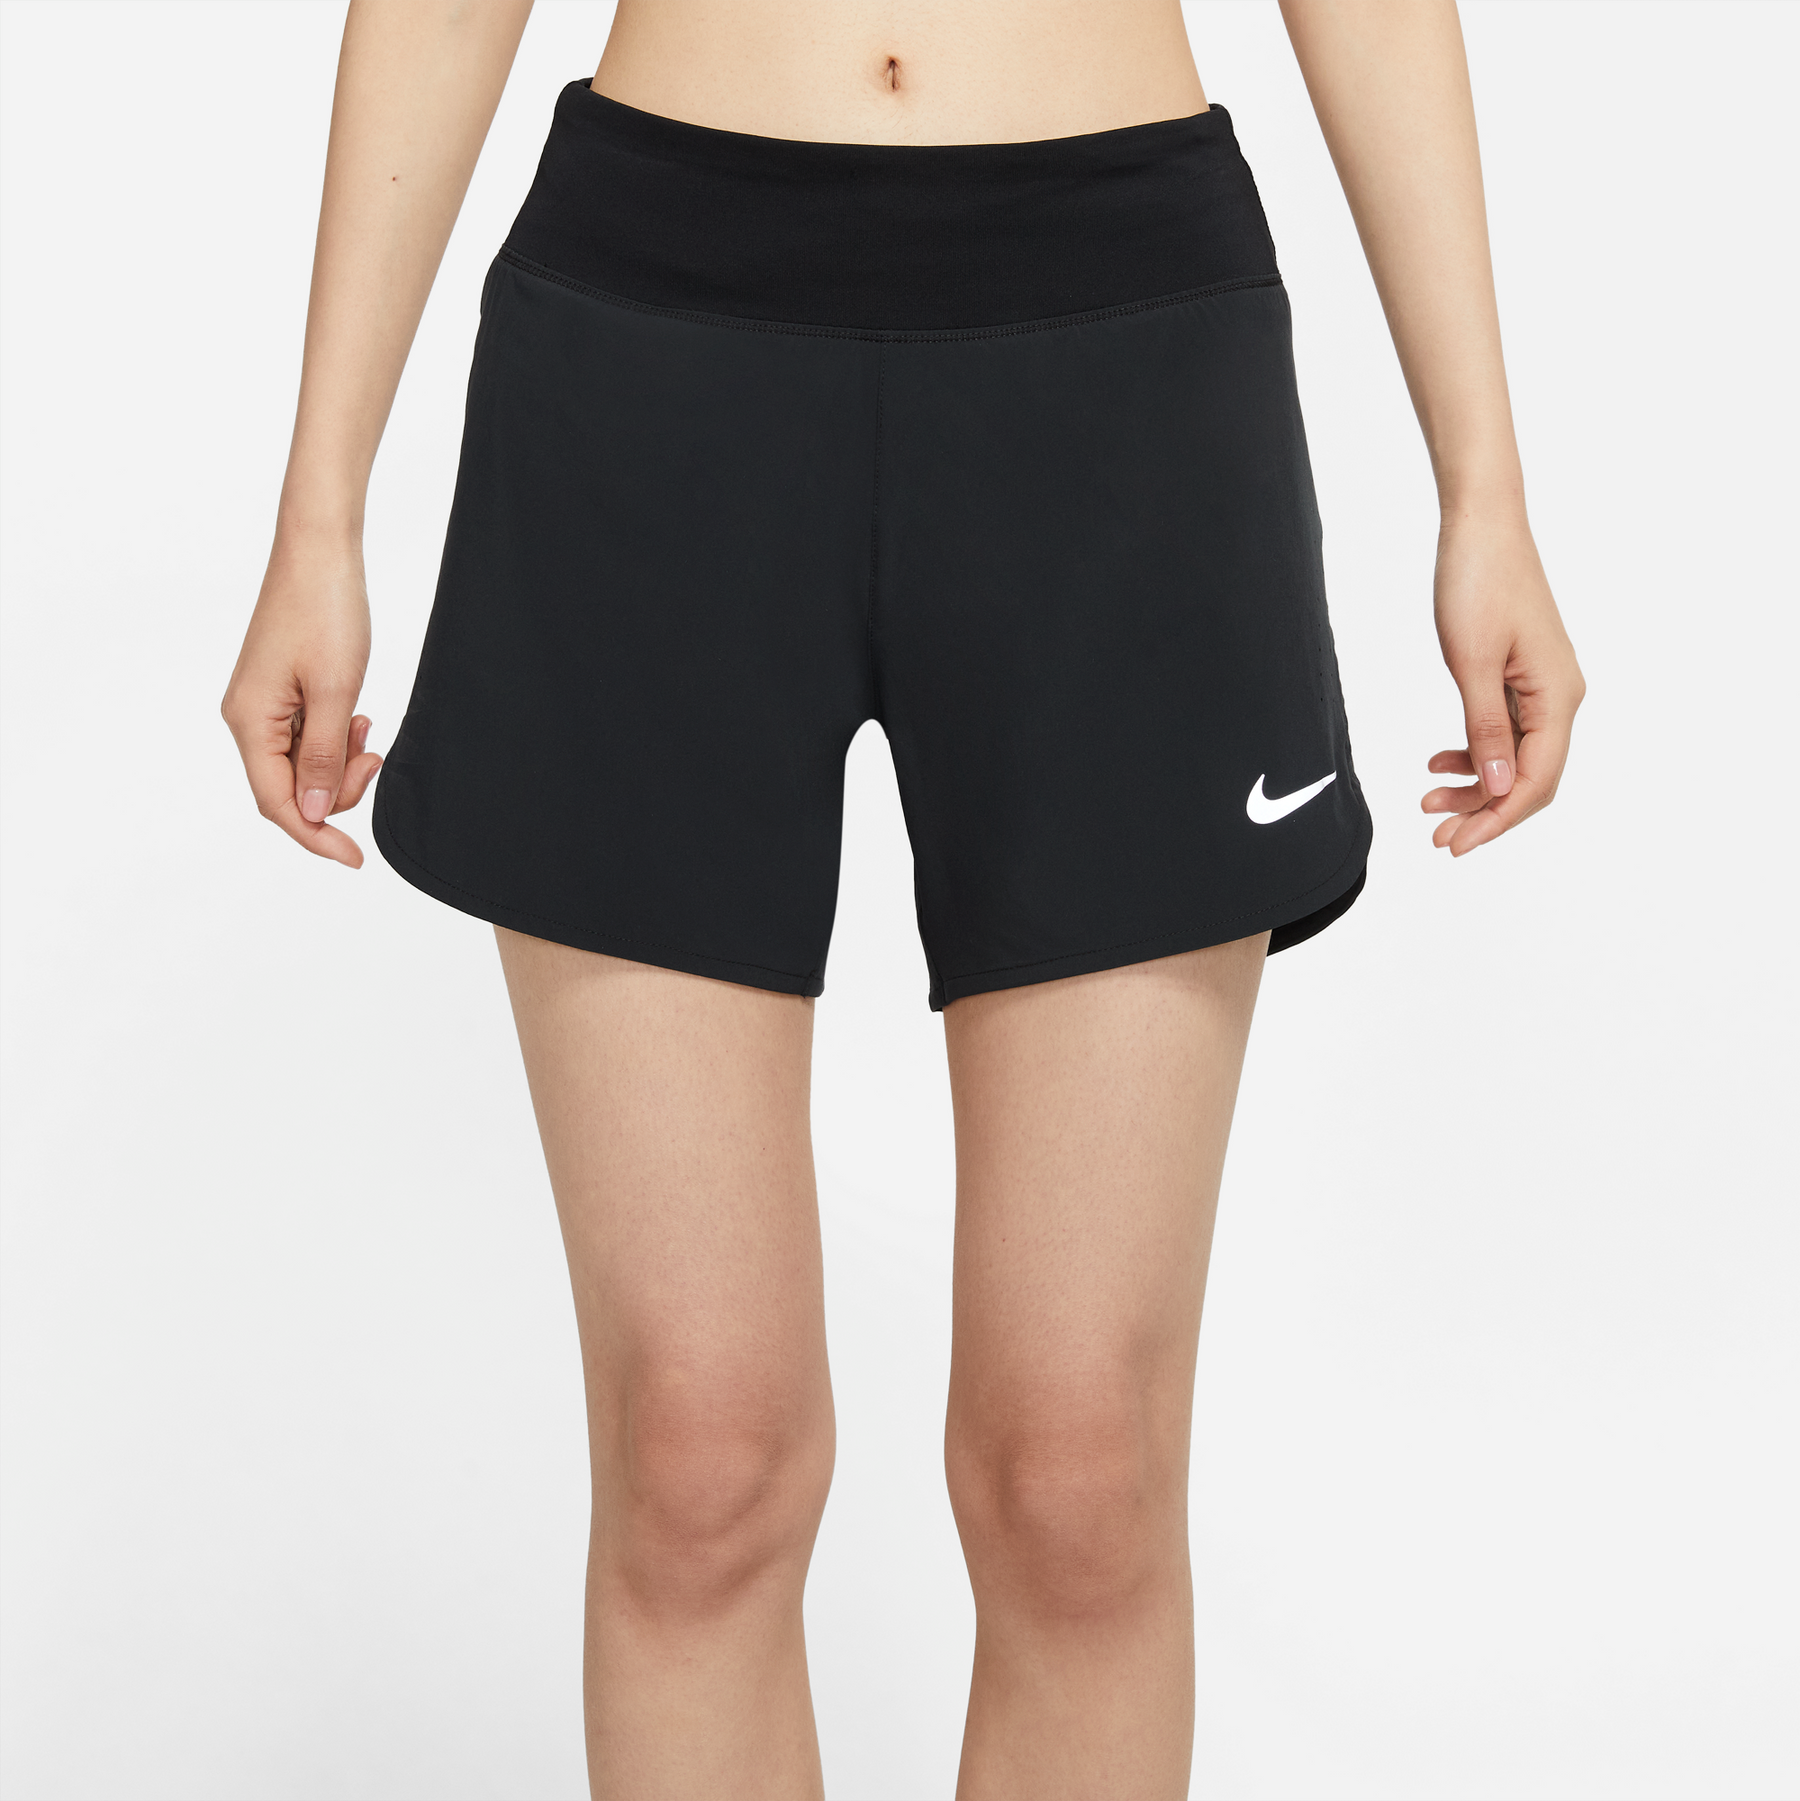 Nike-Women's Nike Eclipse Shorts-Black-Pacers Running